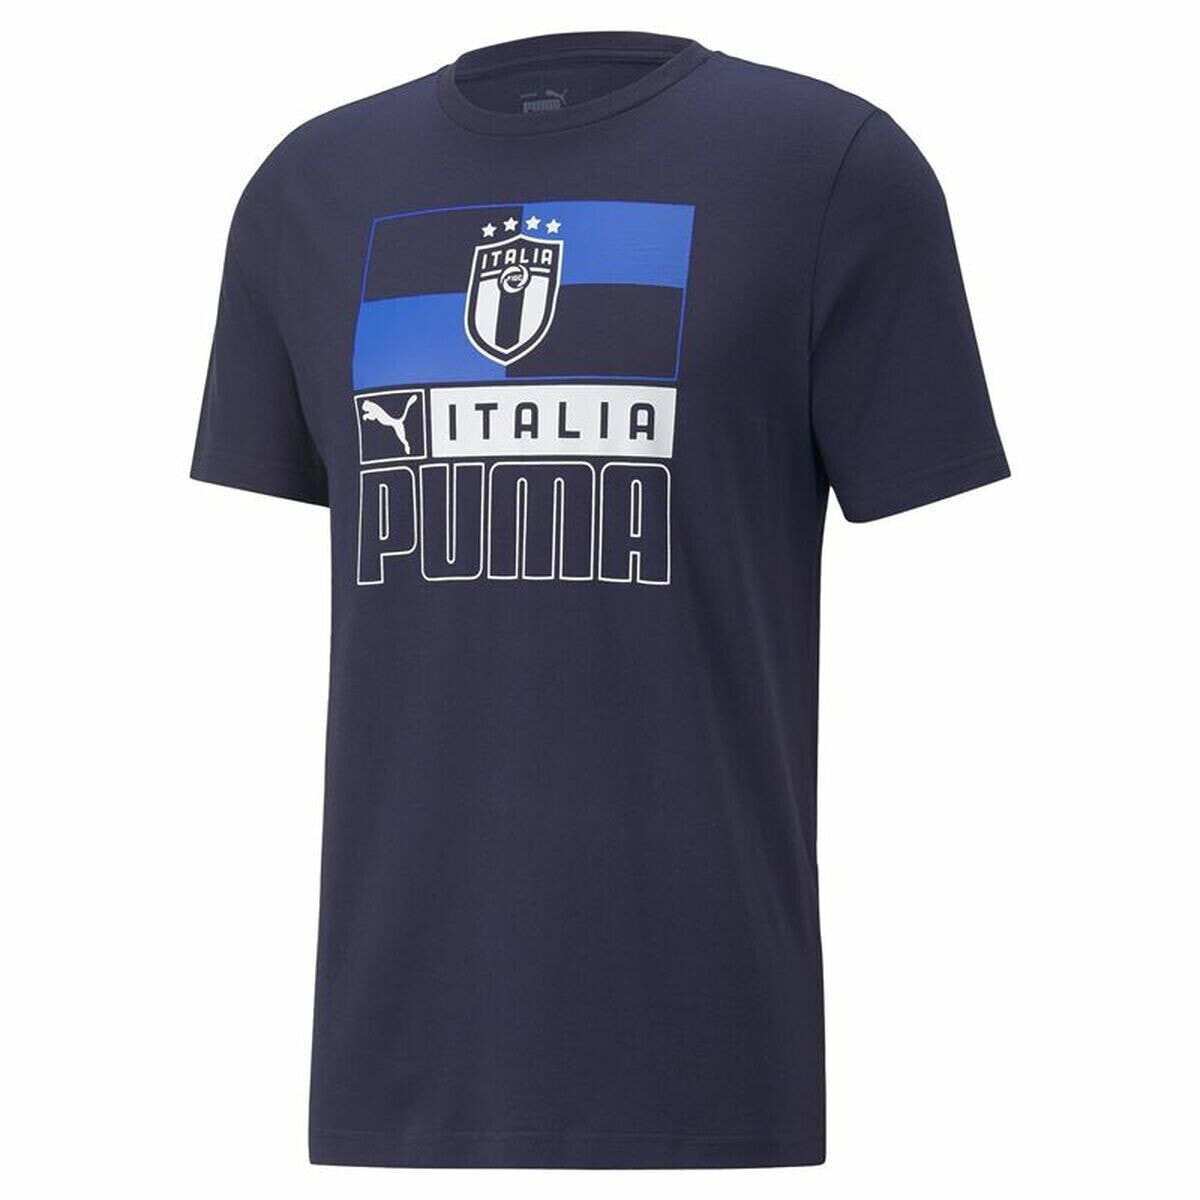 Unisex Short Sleeve T-Shirt Puma Italia FIGC Dark blue